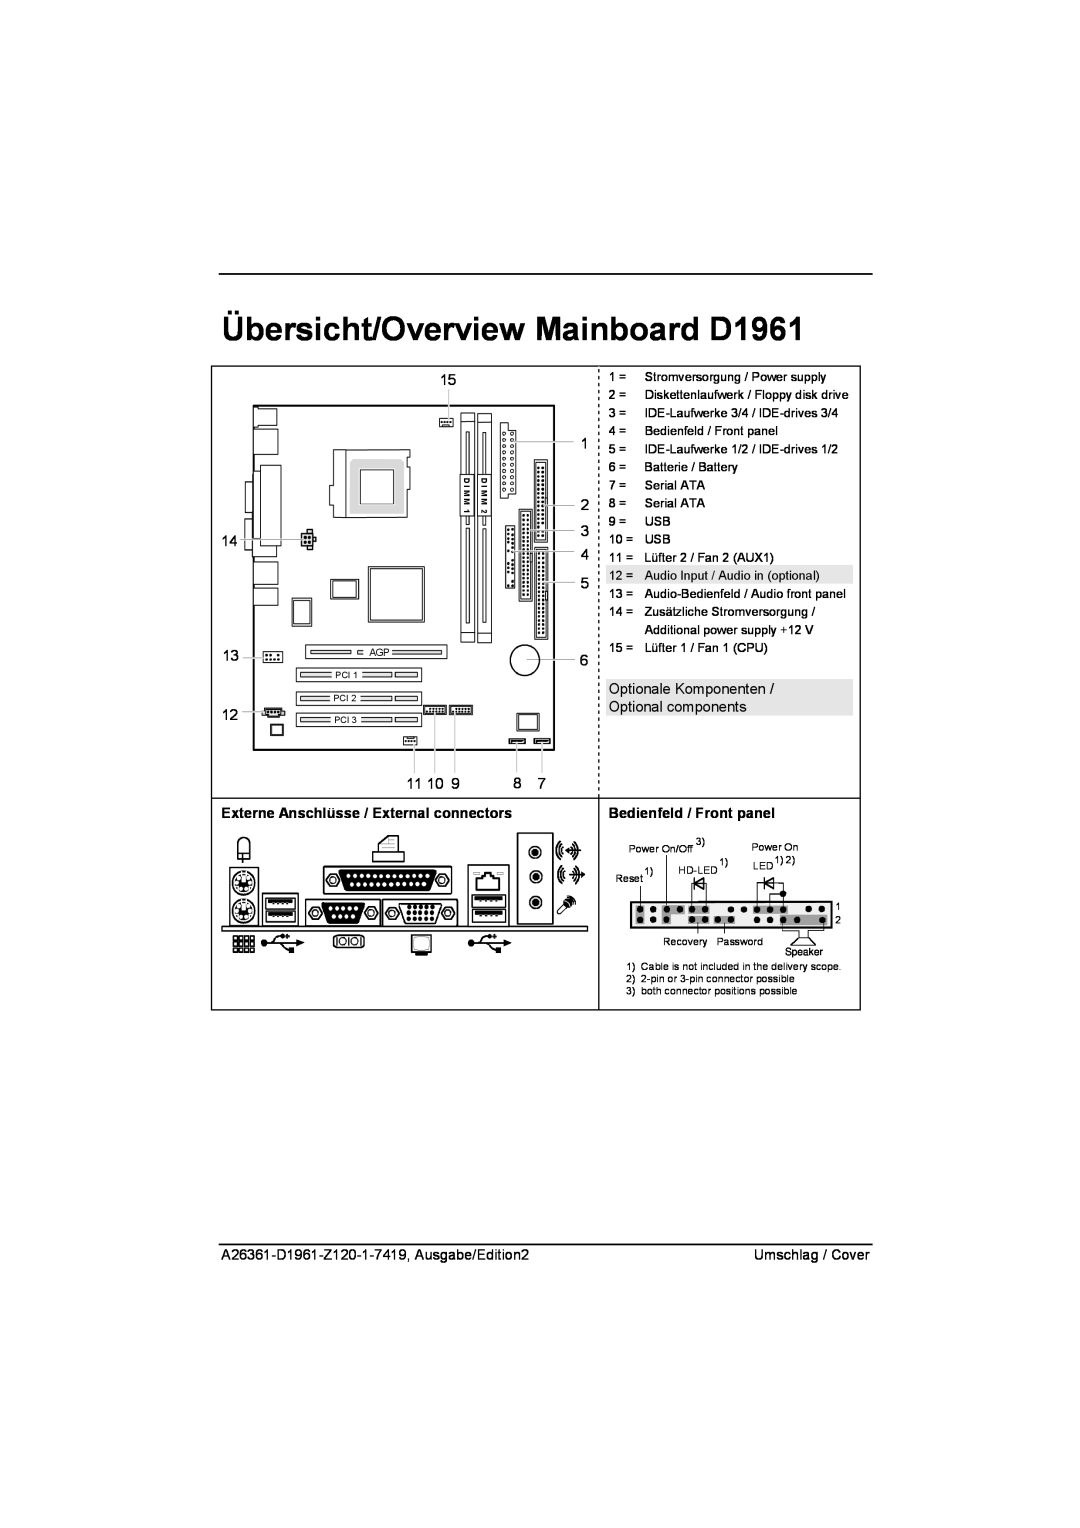 Fujitsu Übersicht/Overview Mainboard D1961, Externe Anschlüsse / External connectors, Bedienfeld / Front panel 